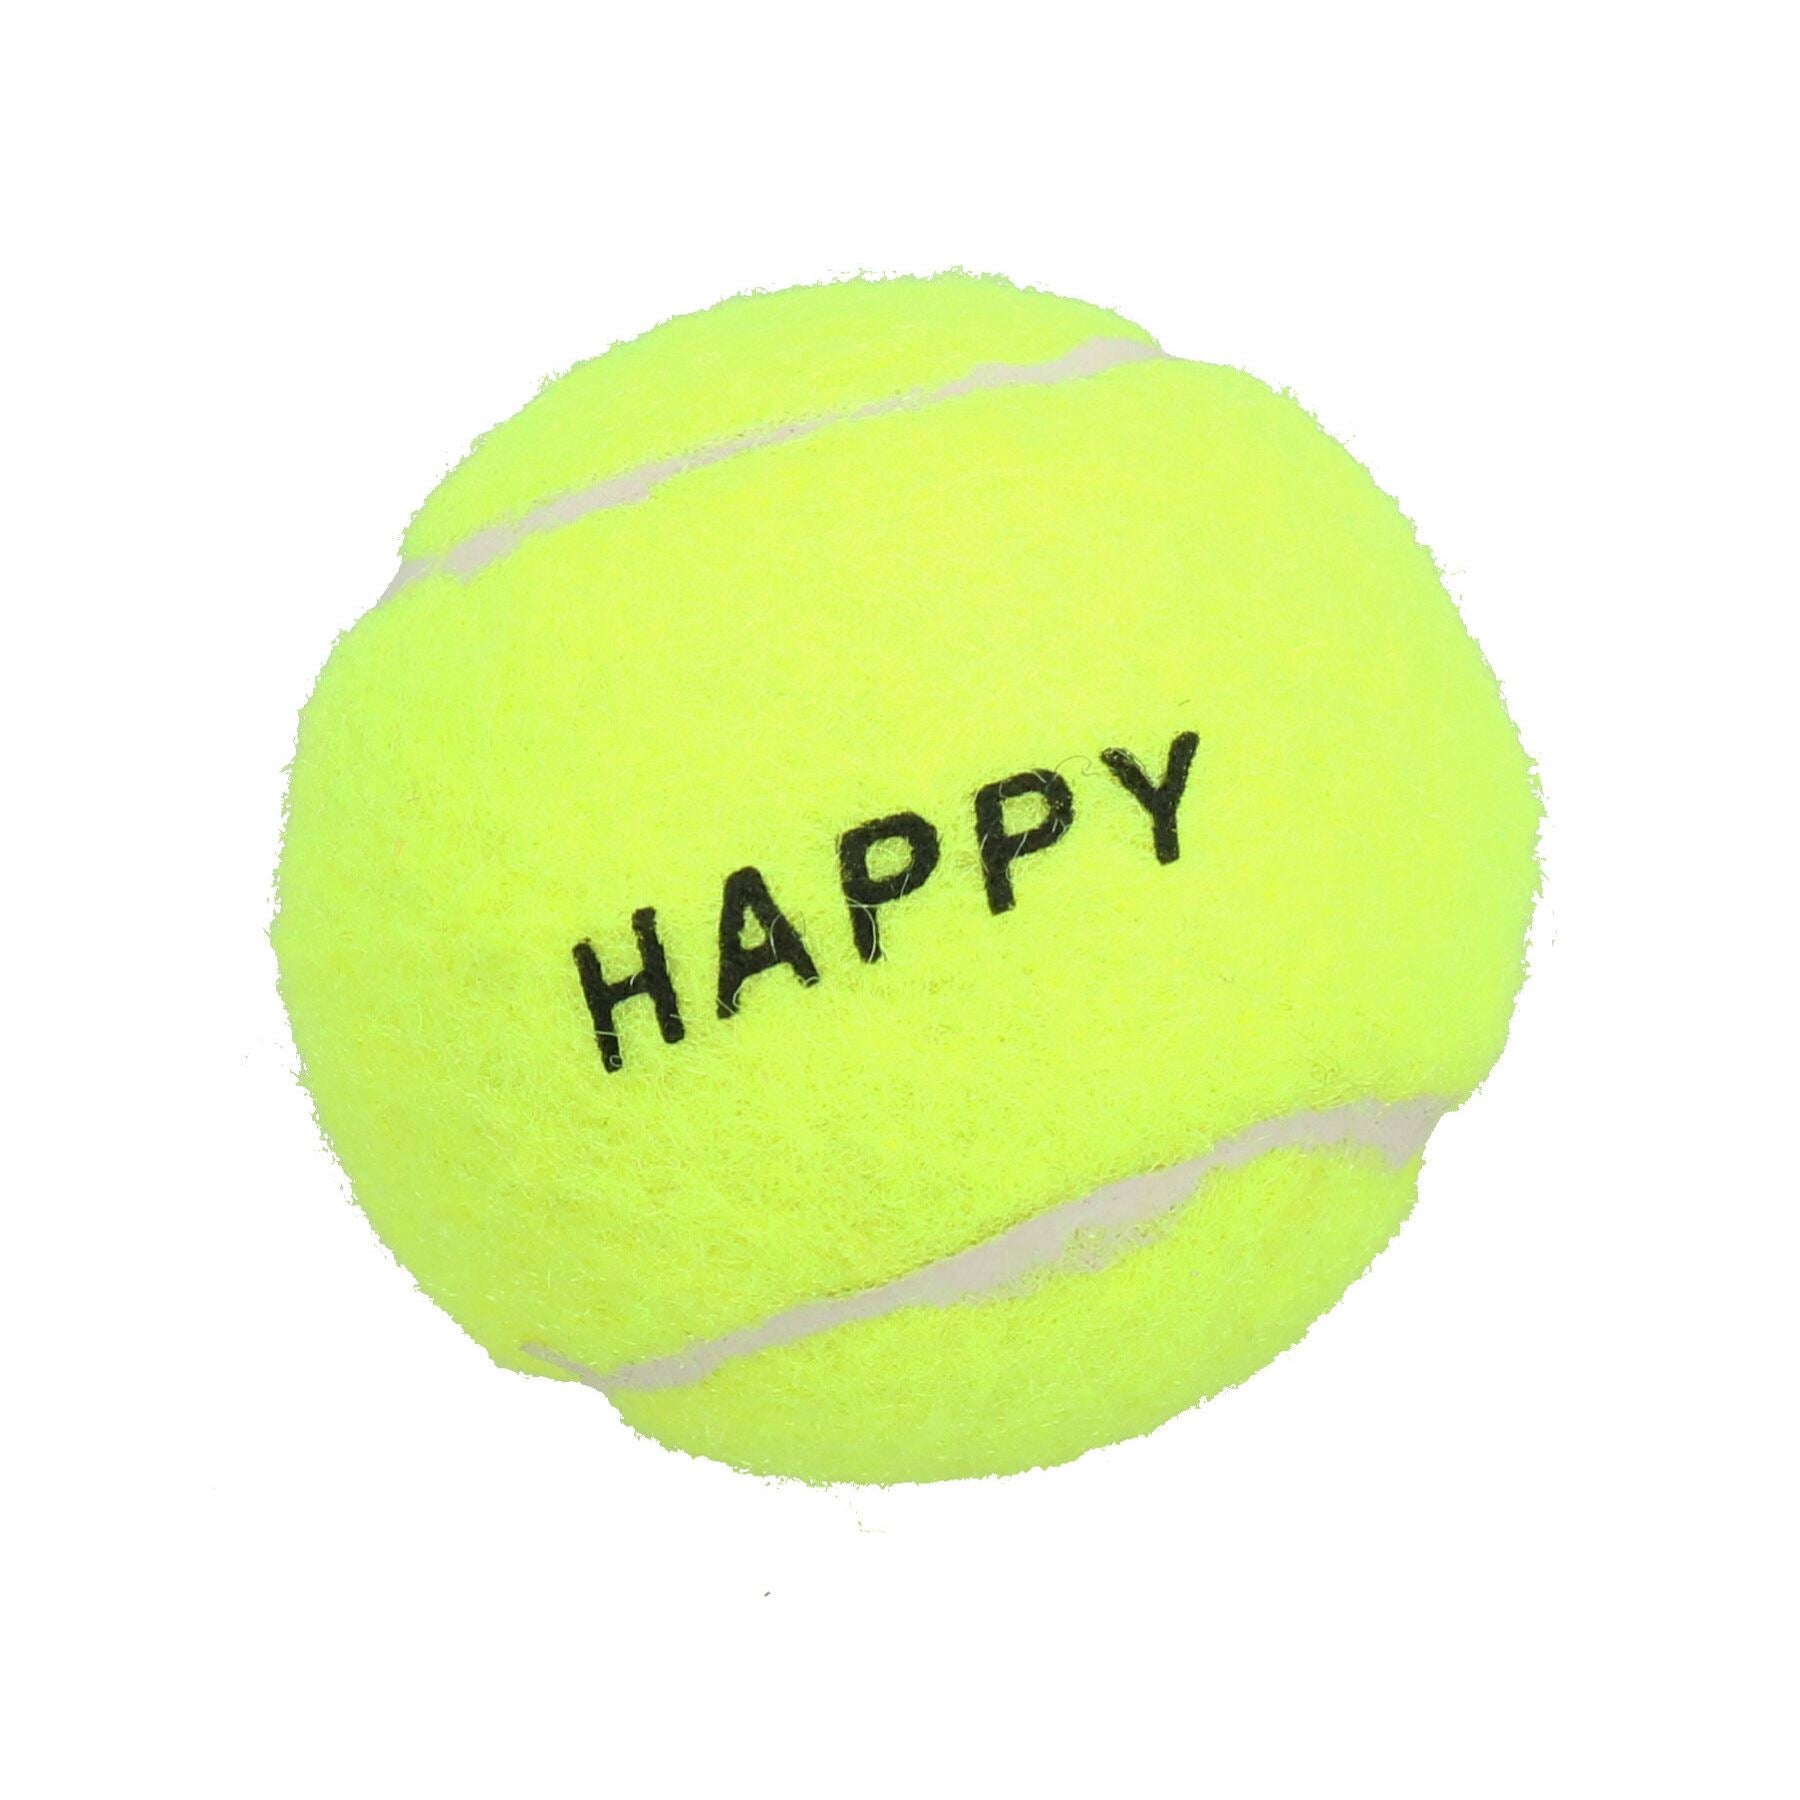 4PK Small Mini Interactive Tennis Ball Dog Play Time Throw Fetch Catch 4.8cm